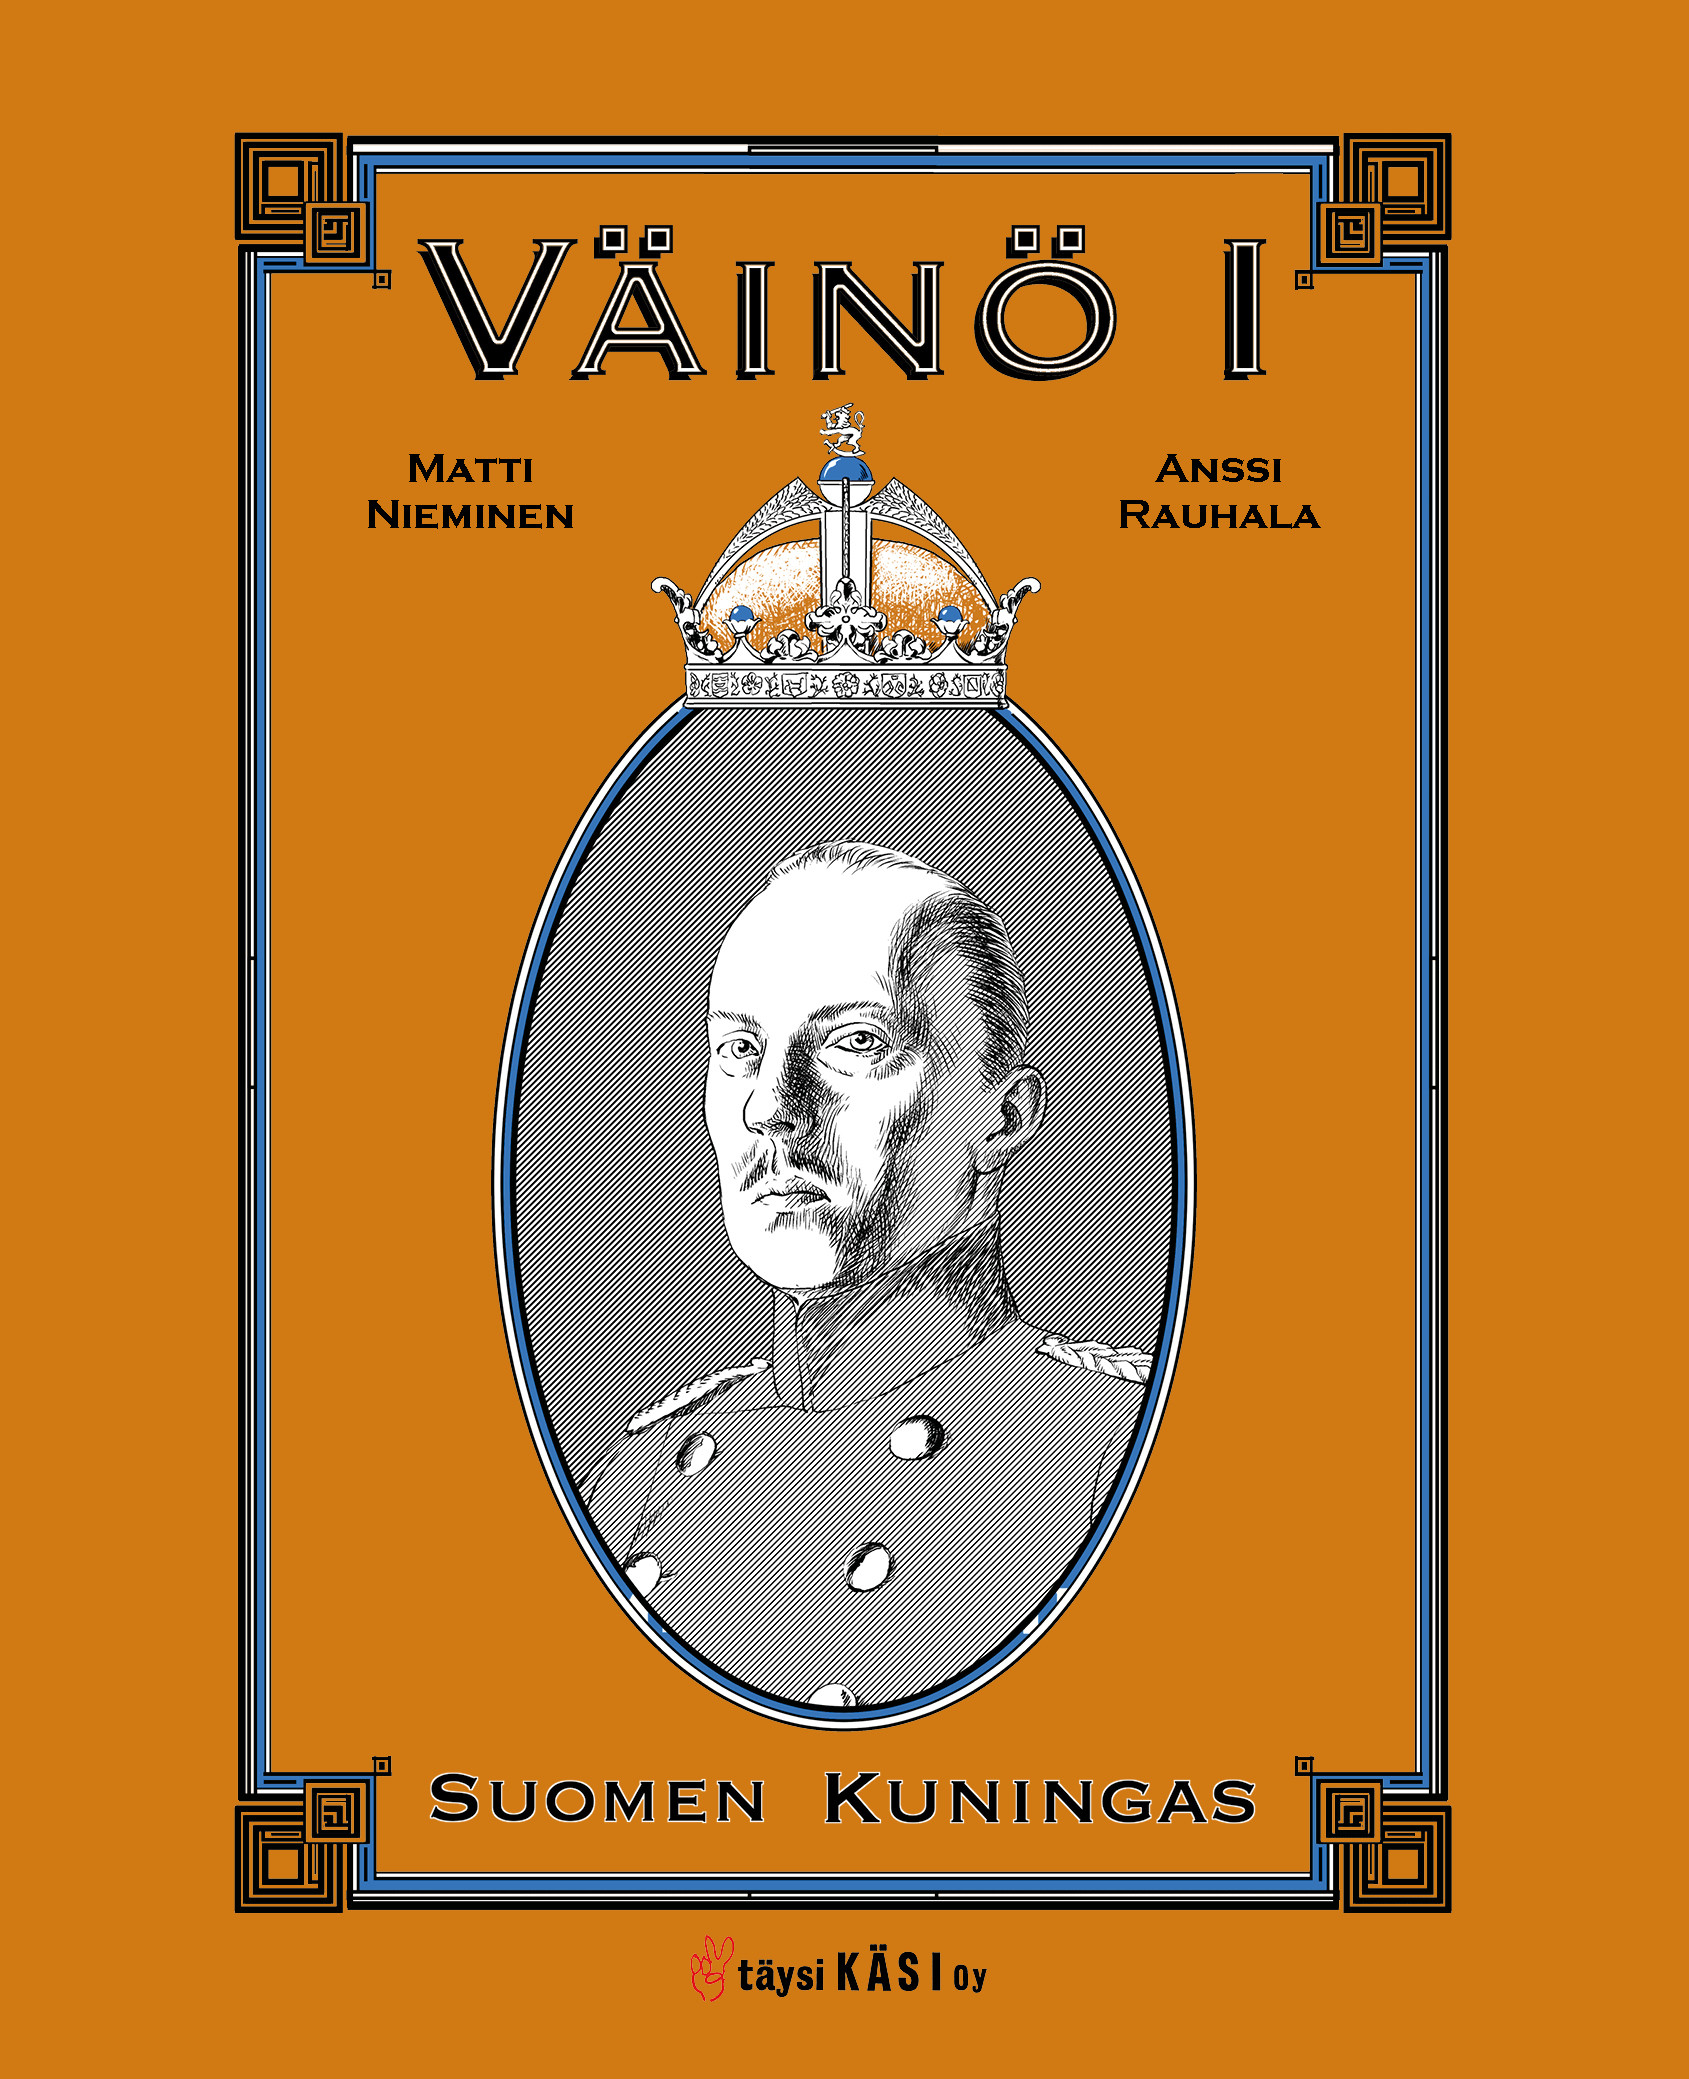 Väinö I - Suomen kuningas